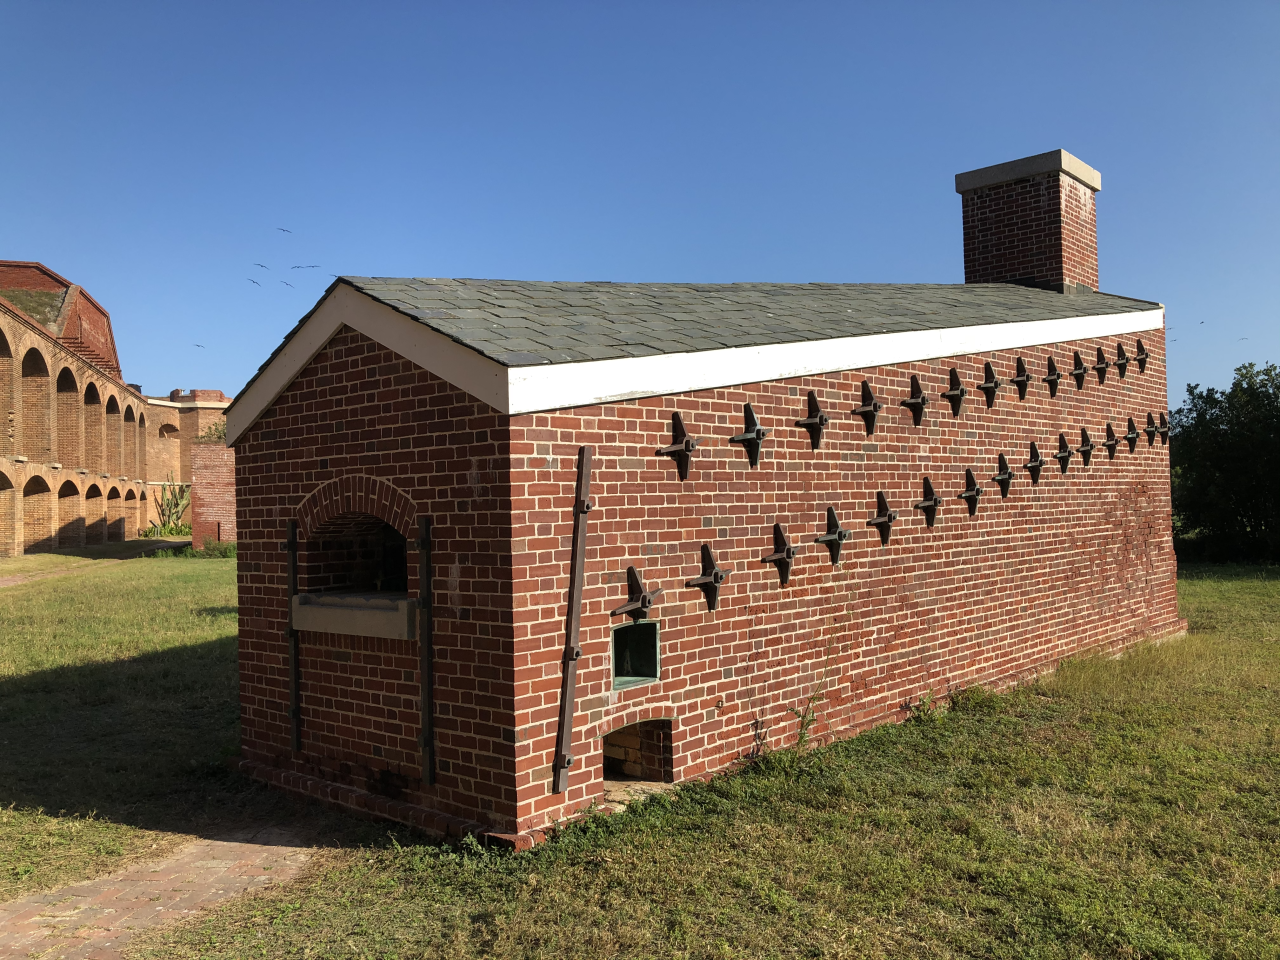 Fort Jefferson - Dry Tortugas